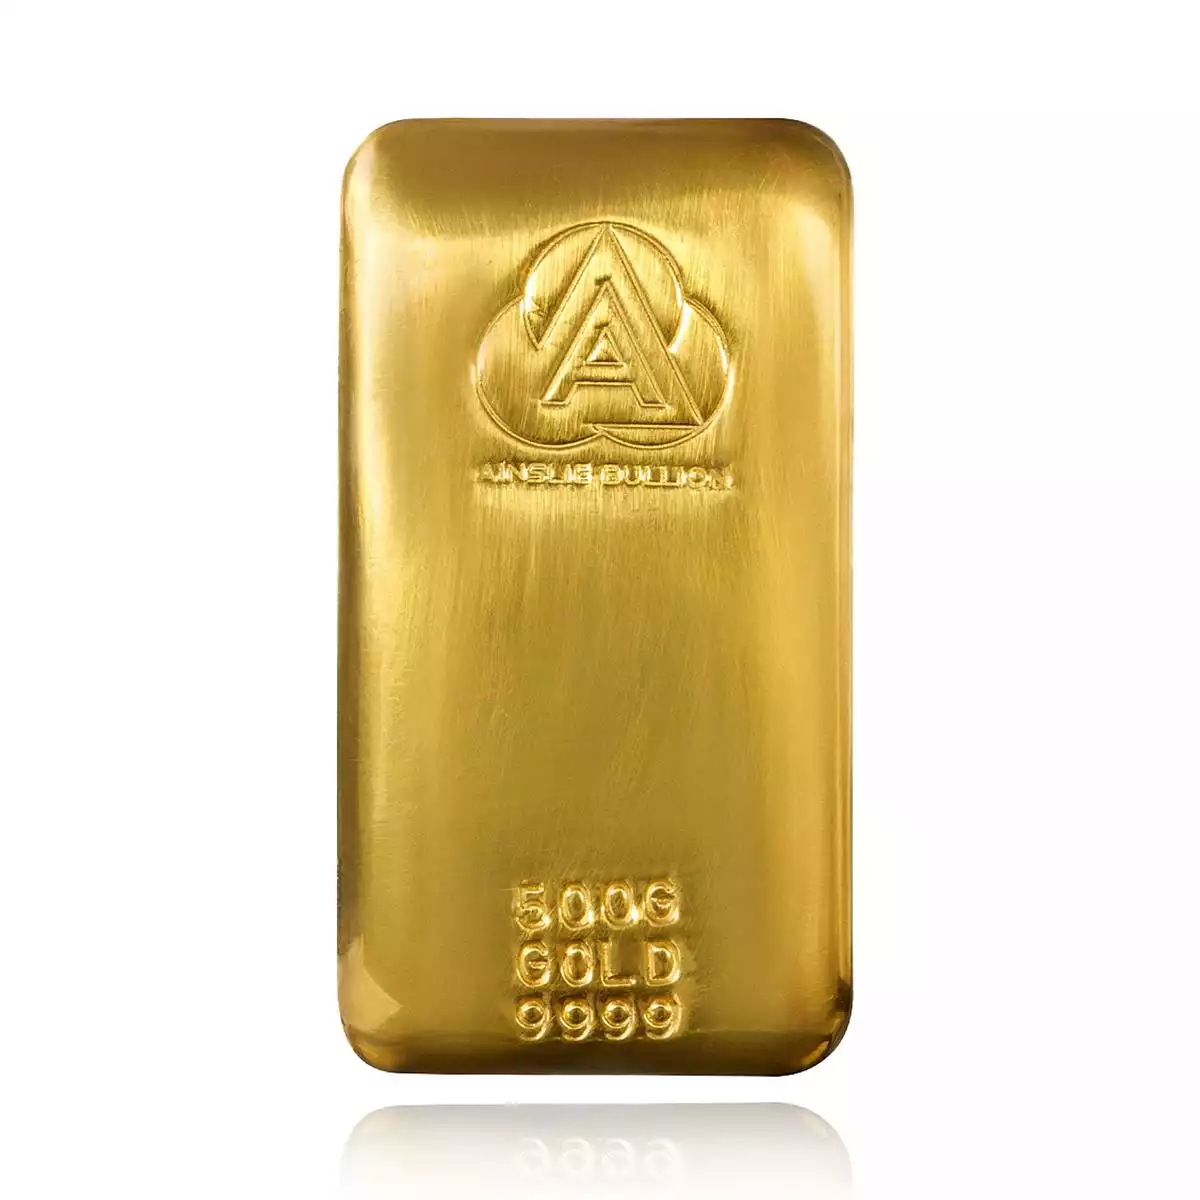 500g ainslie gold bullion.  the ainslie bullion 500g gold bar is the second largest gold bar available in the ainslie bullion range. the size gives in...